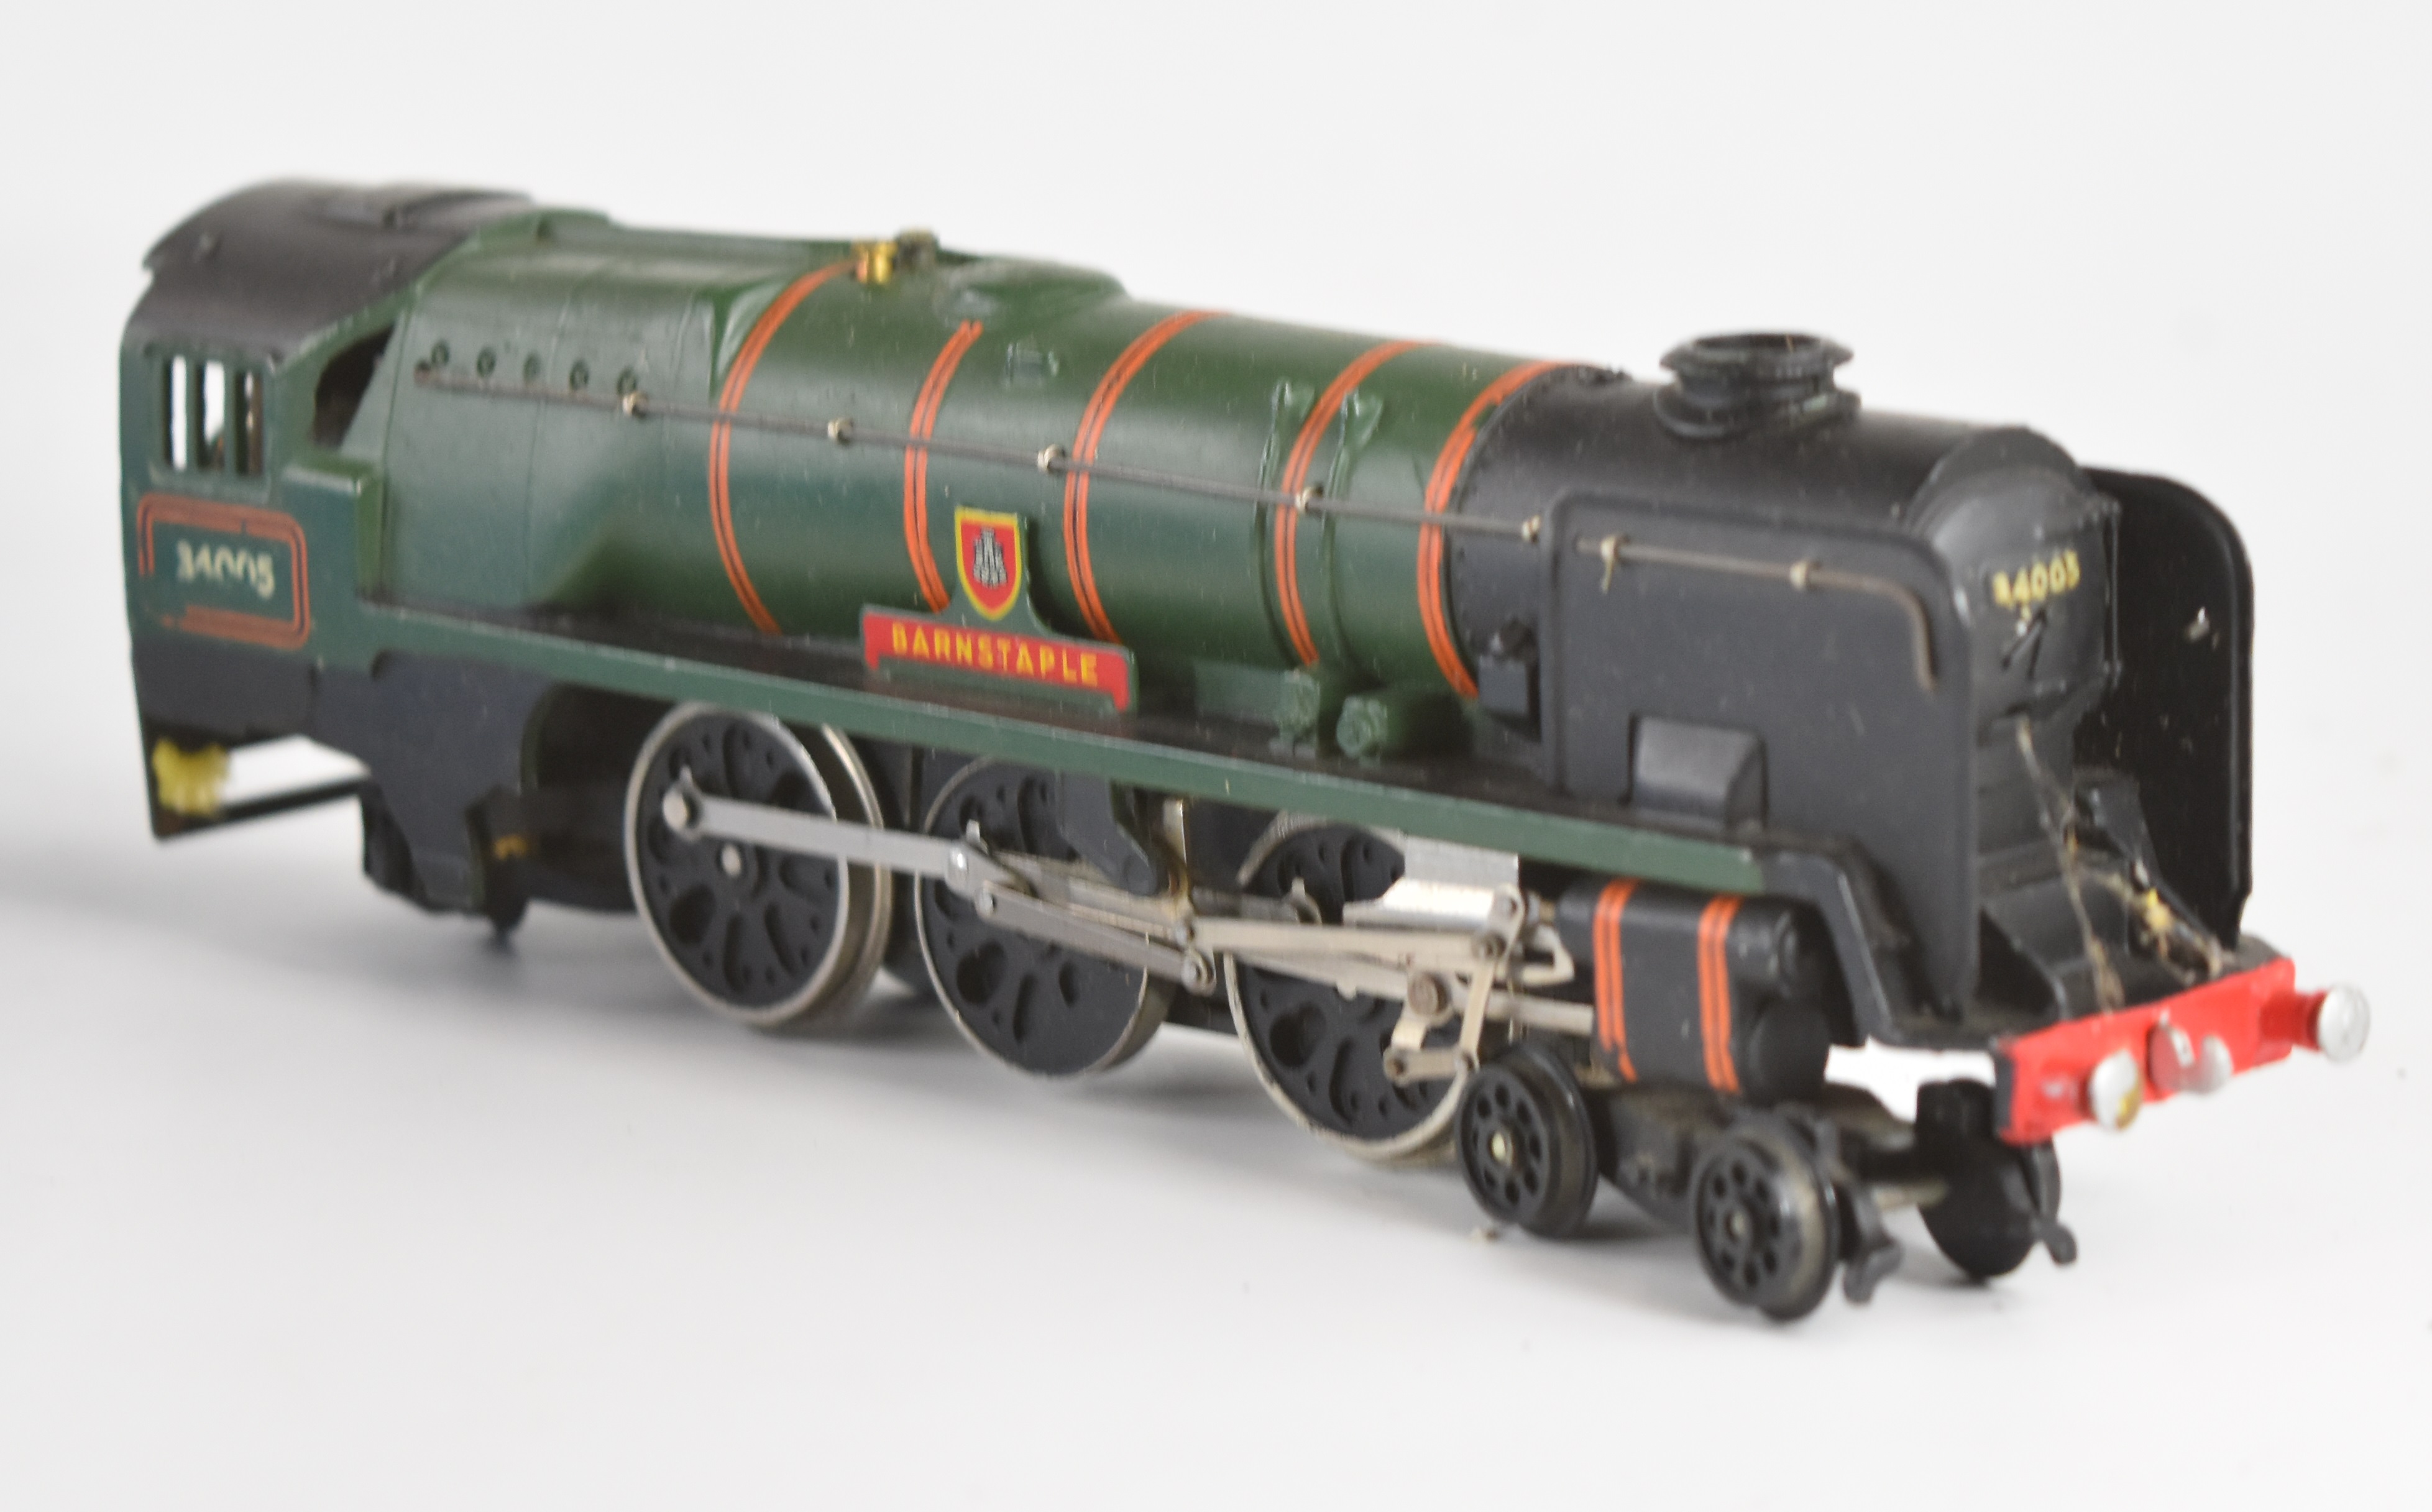 Hornby Dublo 00 gauge model railway set 2035 Pullman Train S.R, in original box - Image 4 of 5